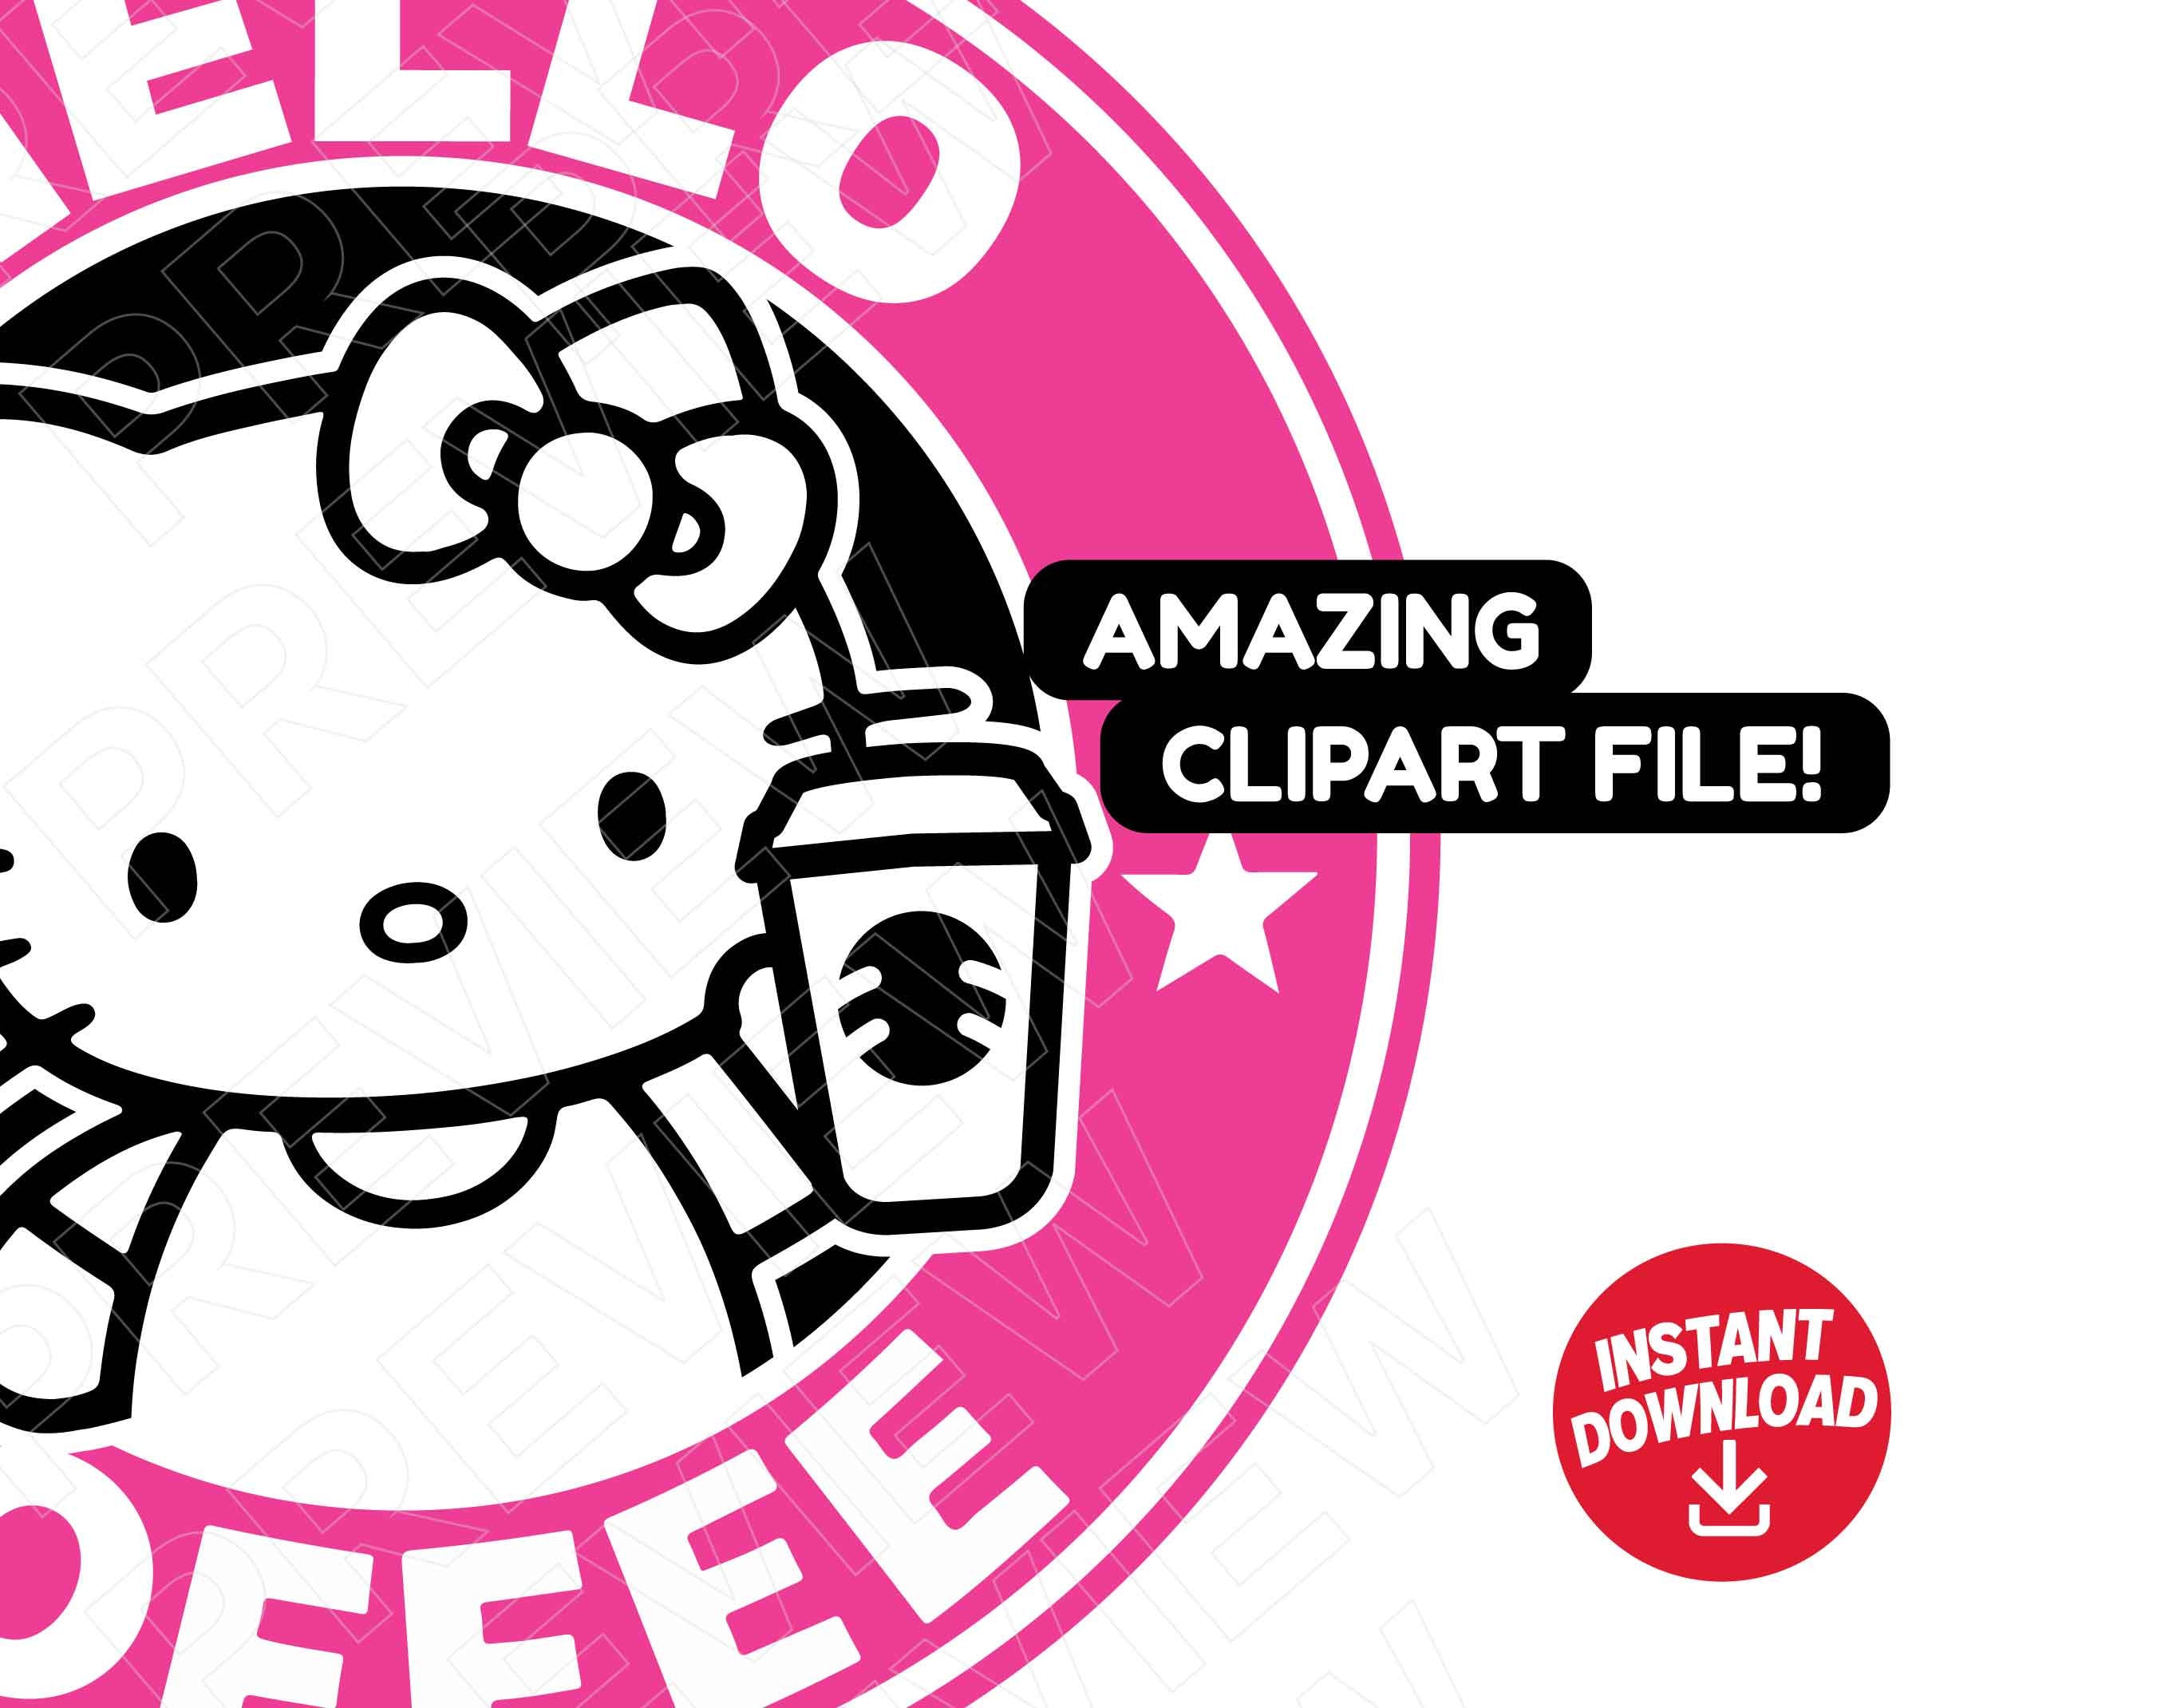 Hello Kitty SVG Starbucks coffee svg clipart cut file cricut | Etsy